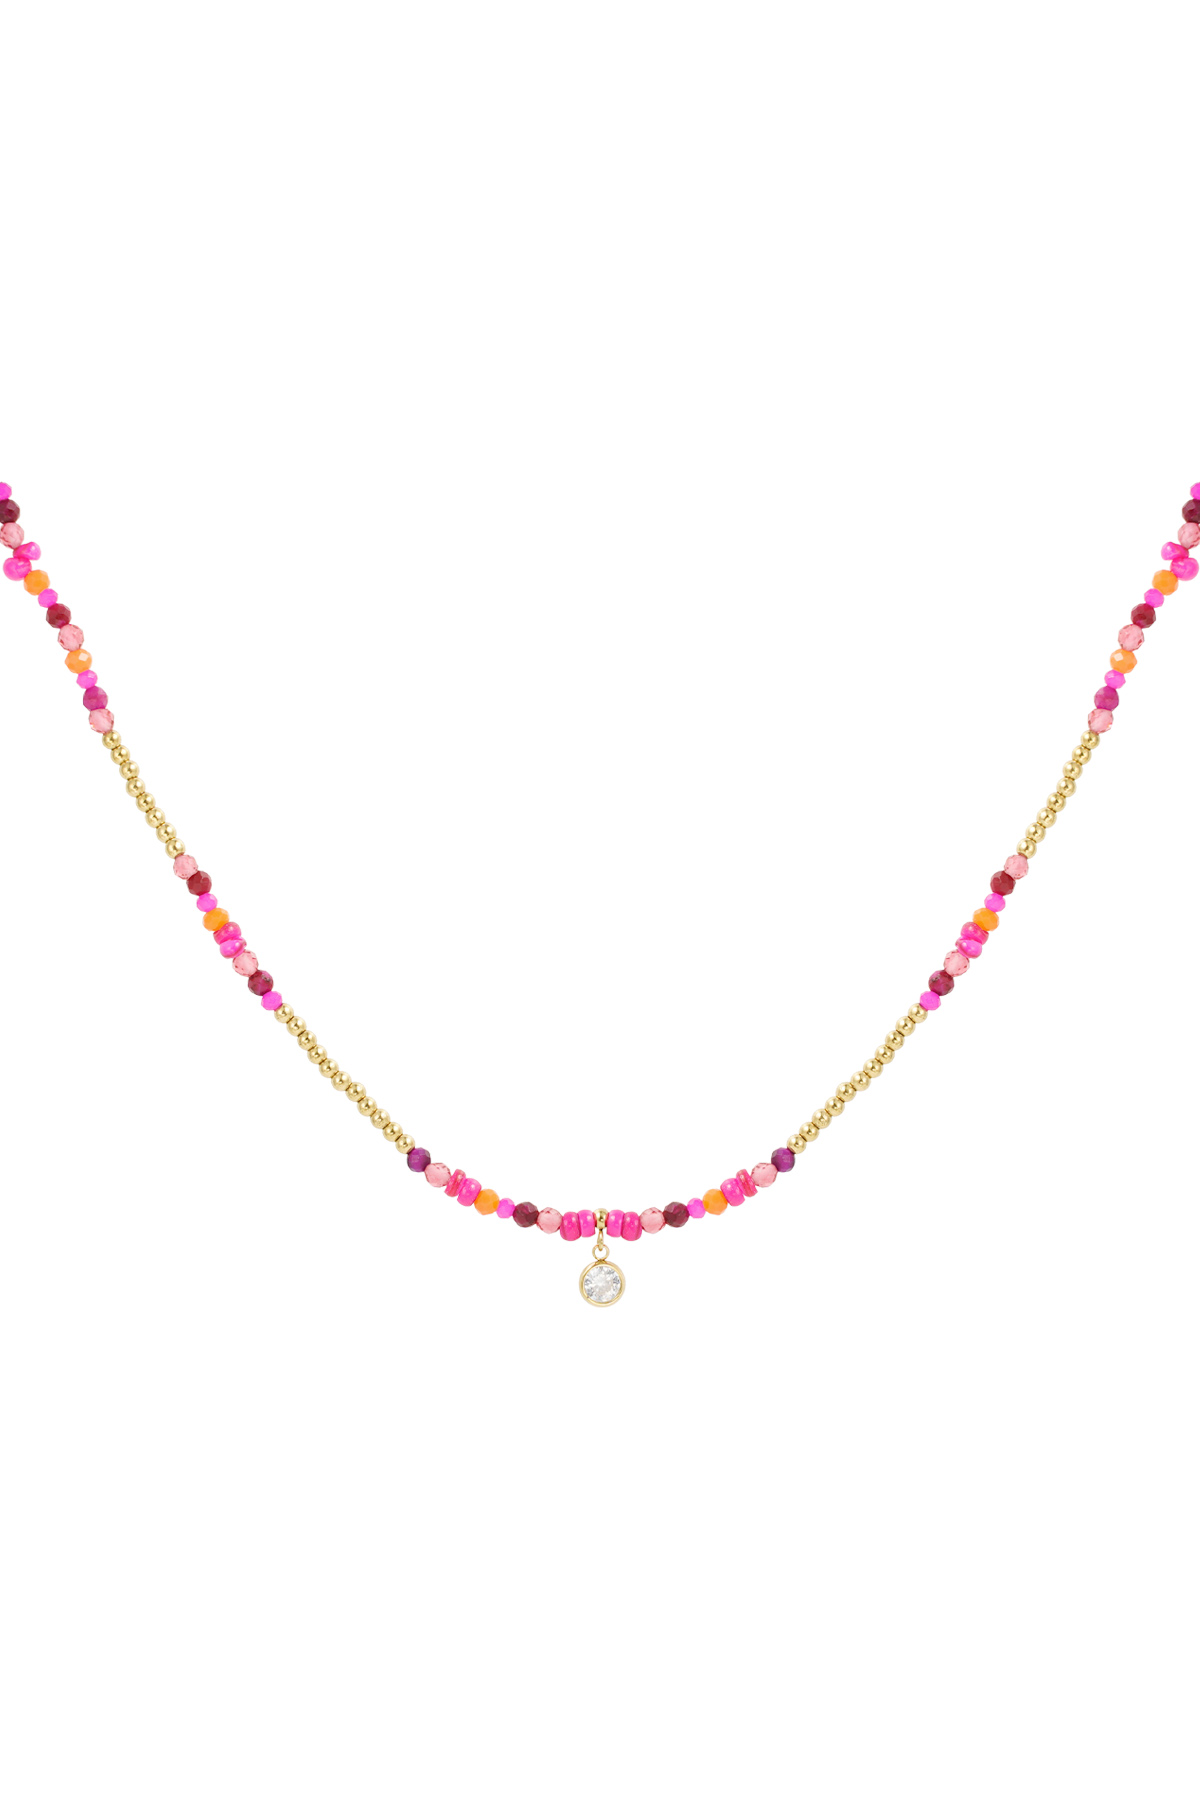 Colorful necklace natural stone and rhinestone - fuchsia